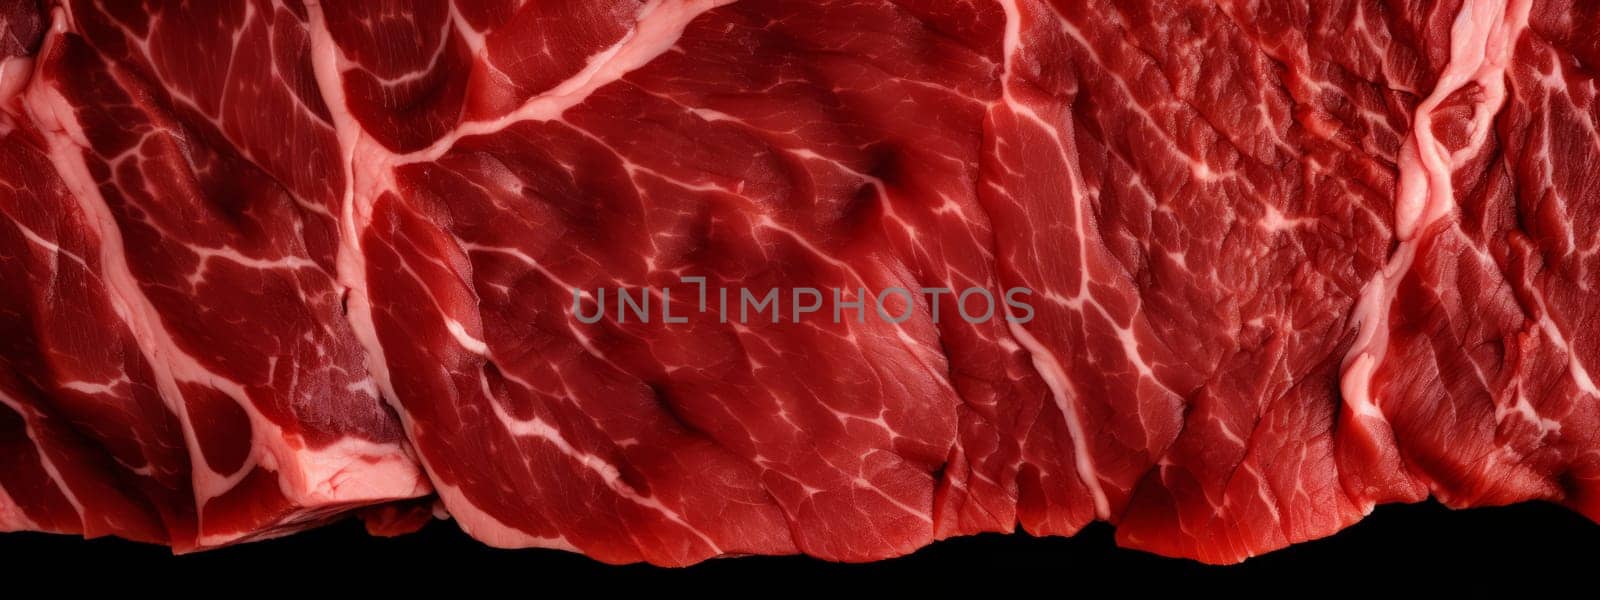 realistic red meat steak texture. 3d raw meat background. Cow cut steak pattern. by Artsiom